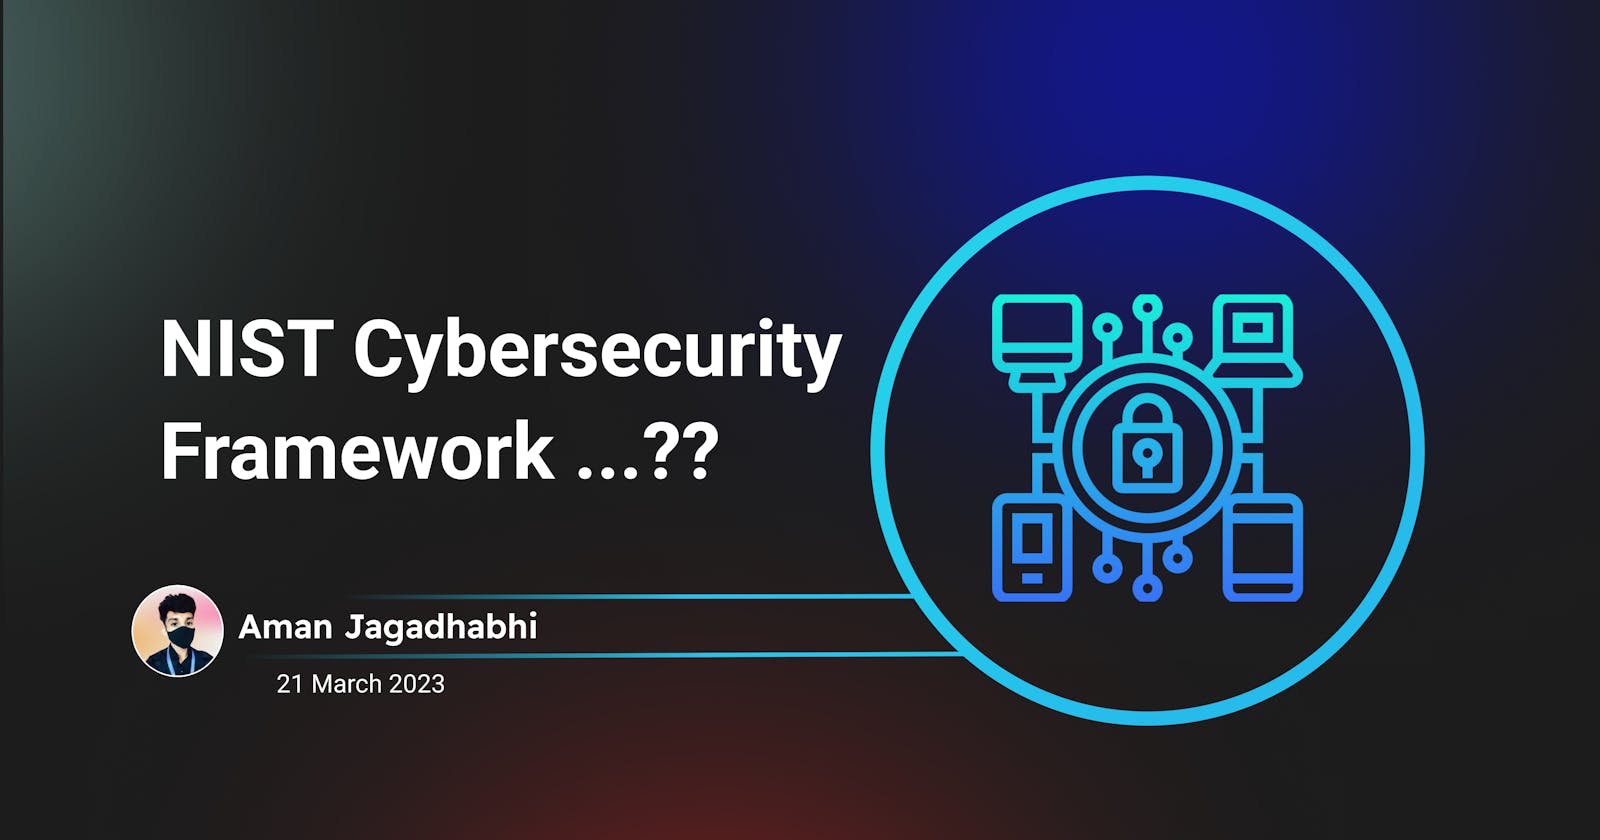 NIST Cybersecurity Framework ...??